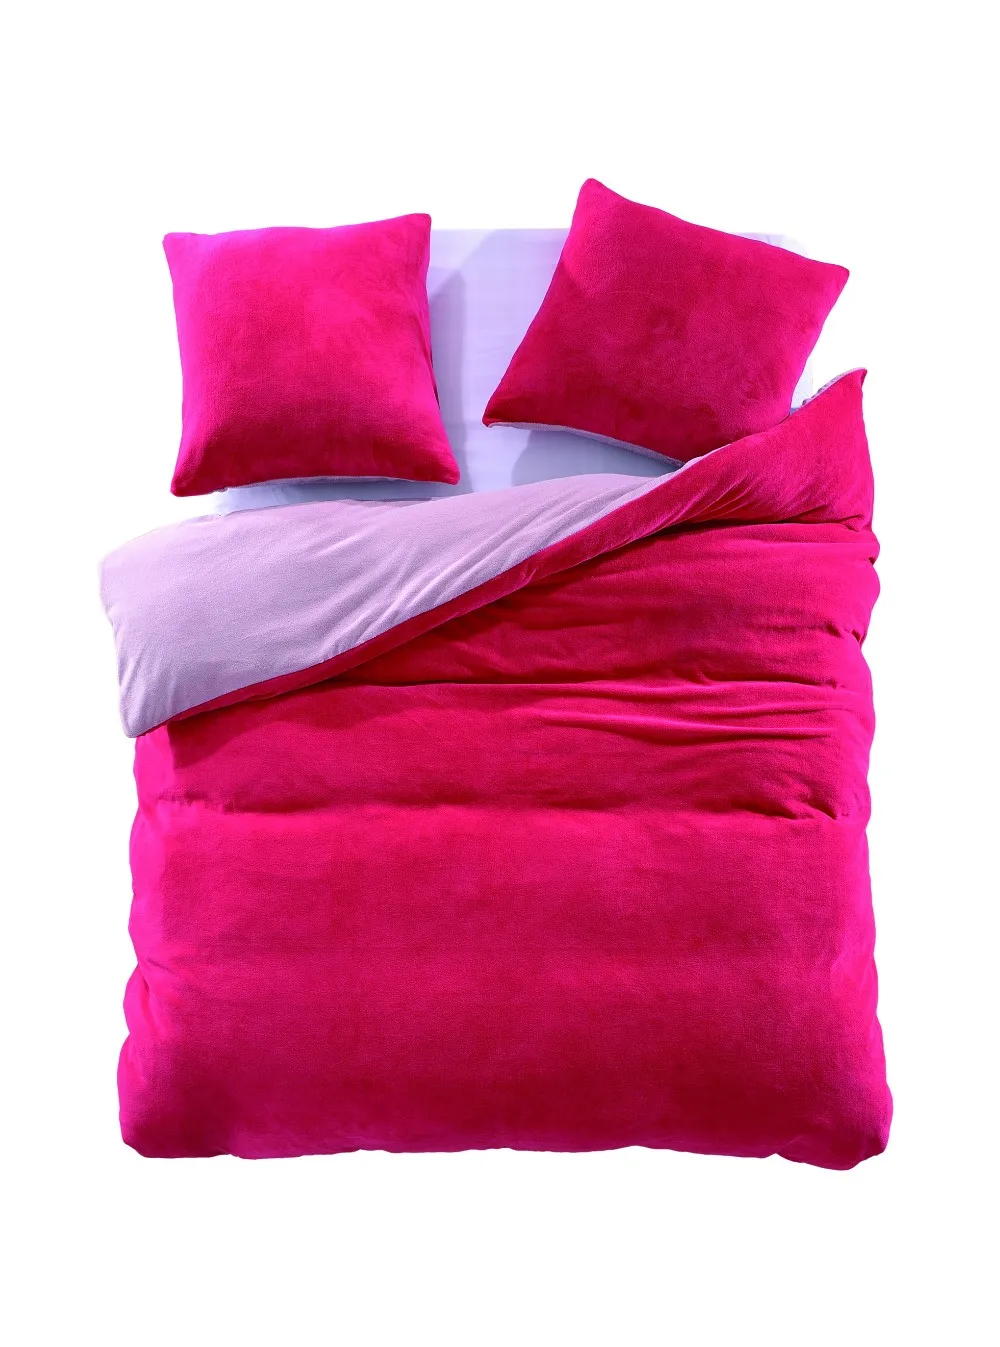 Coral Fleece Bedding Set 100 Polyester Colorful Duvet Cover